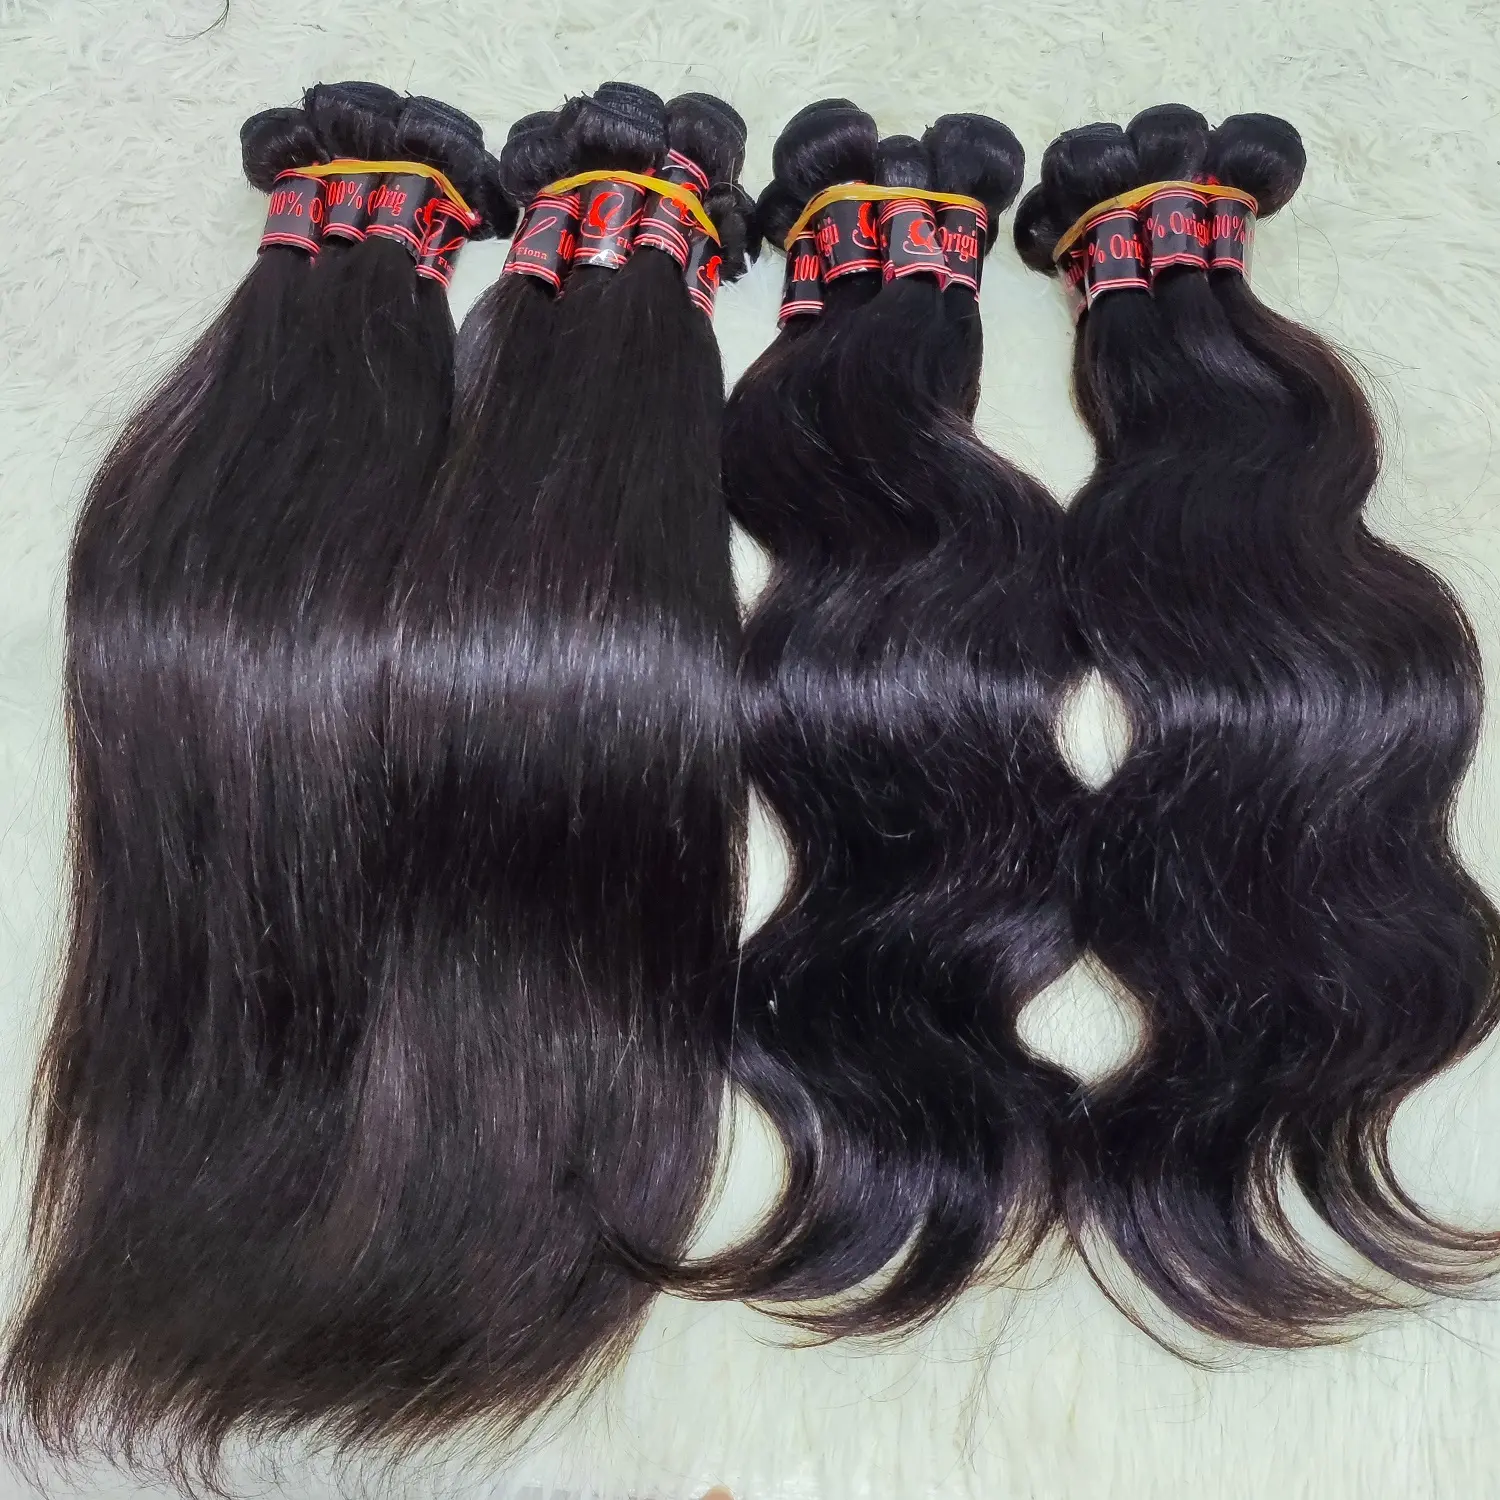 Letsfly - Extensões de cabelo onduladas para corpo liso e sedoso de 18 polegadas, cabelo natural brasileiro remy, pacote barato, envio rápido